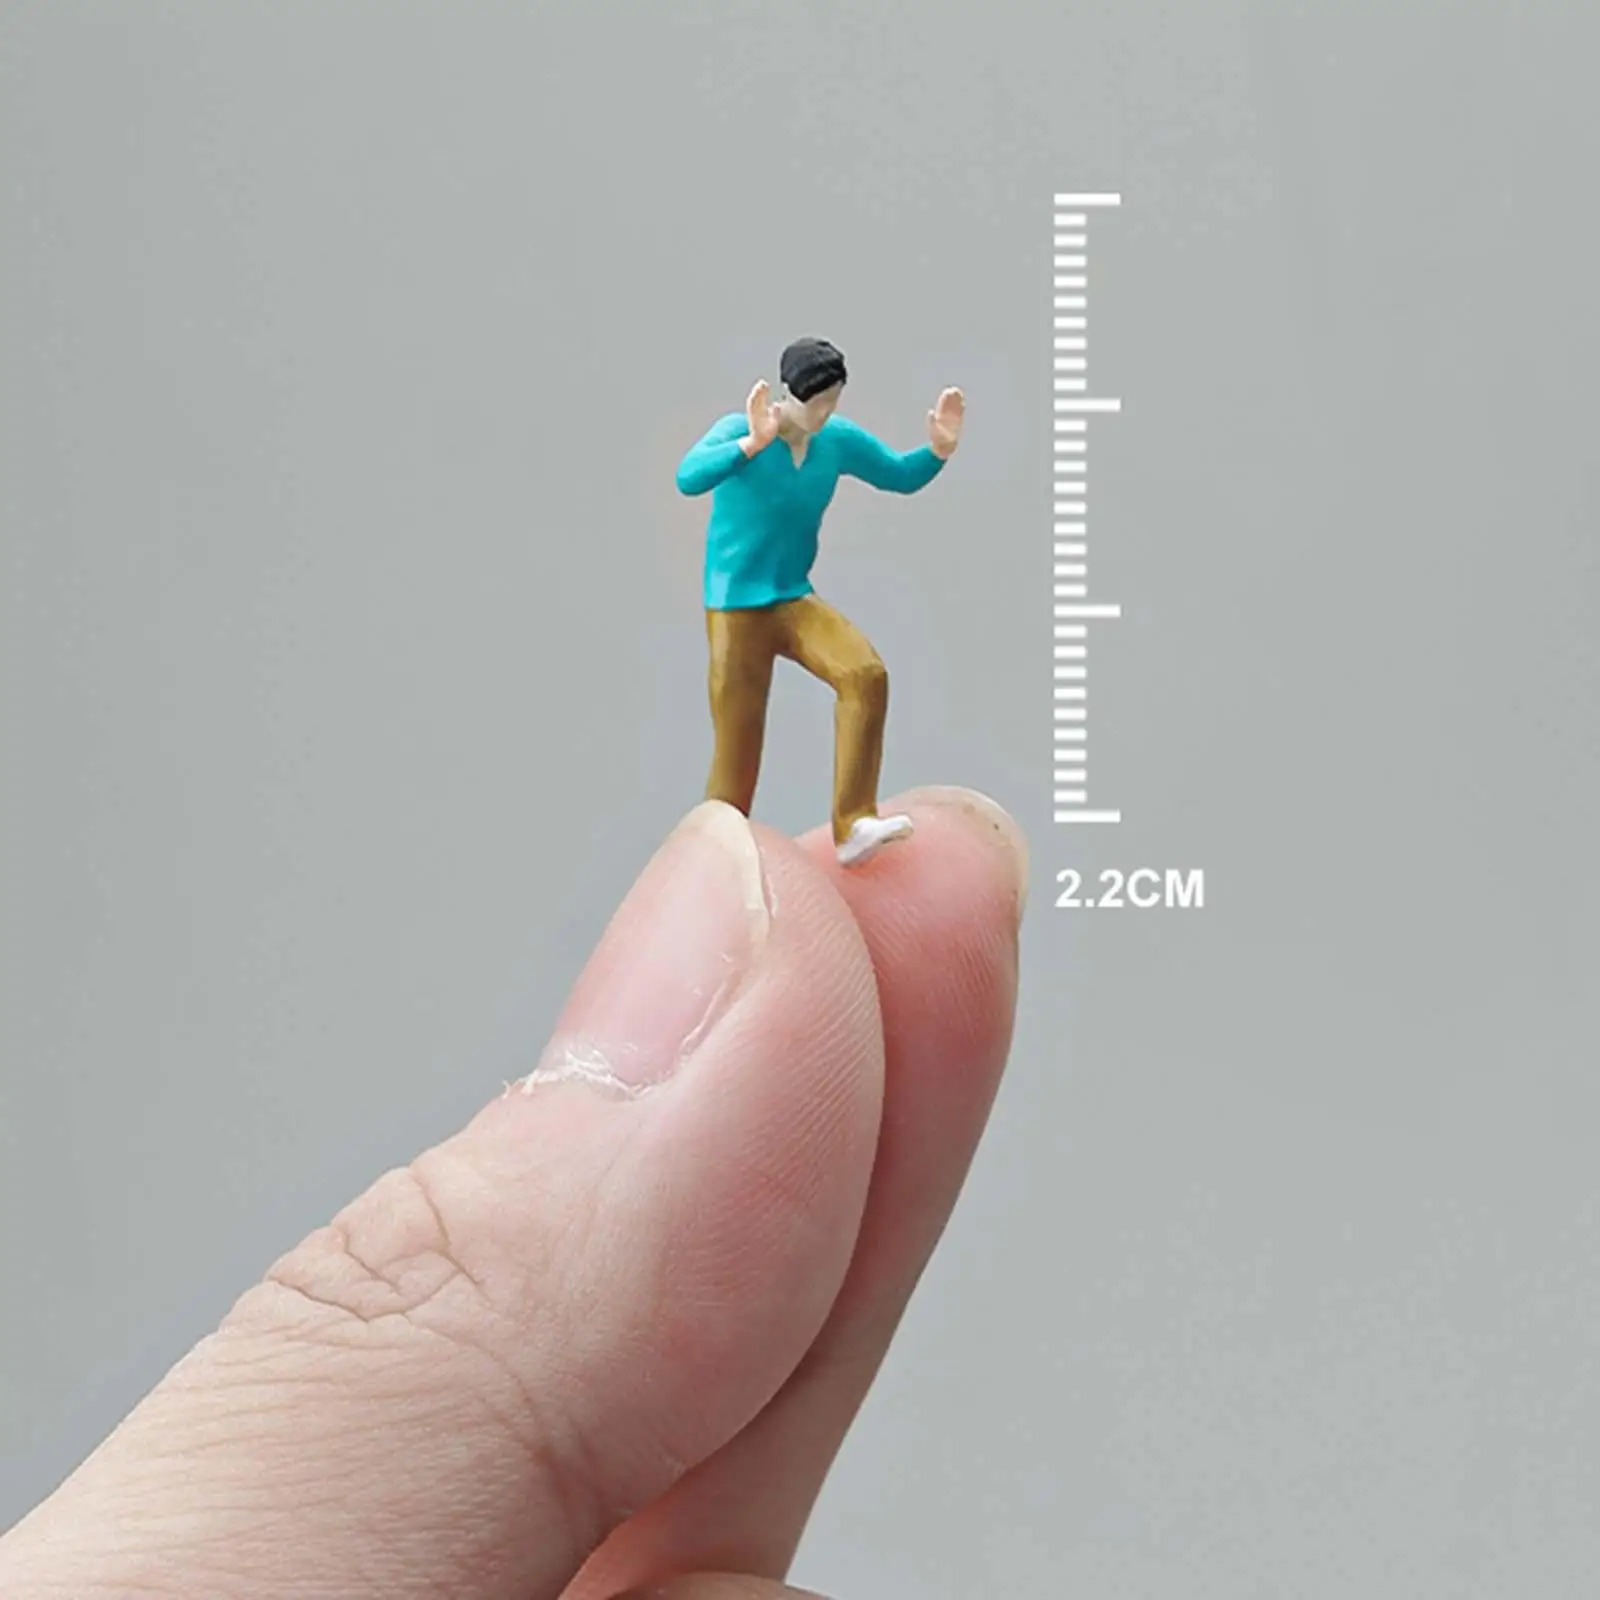 1/64 Miniature Model Figures Realistic Figures Movie Props DIY Layout Scenery Accs 1/64 Figures Model Micro Landscapes Decor